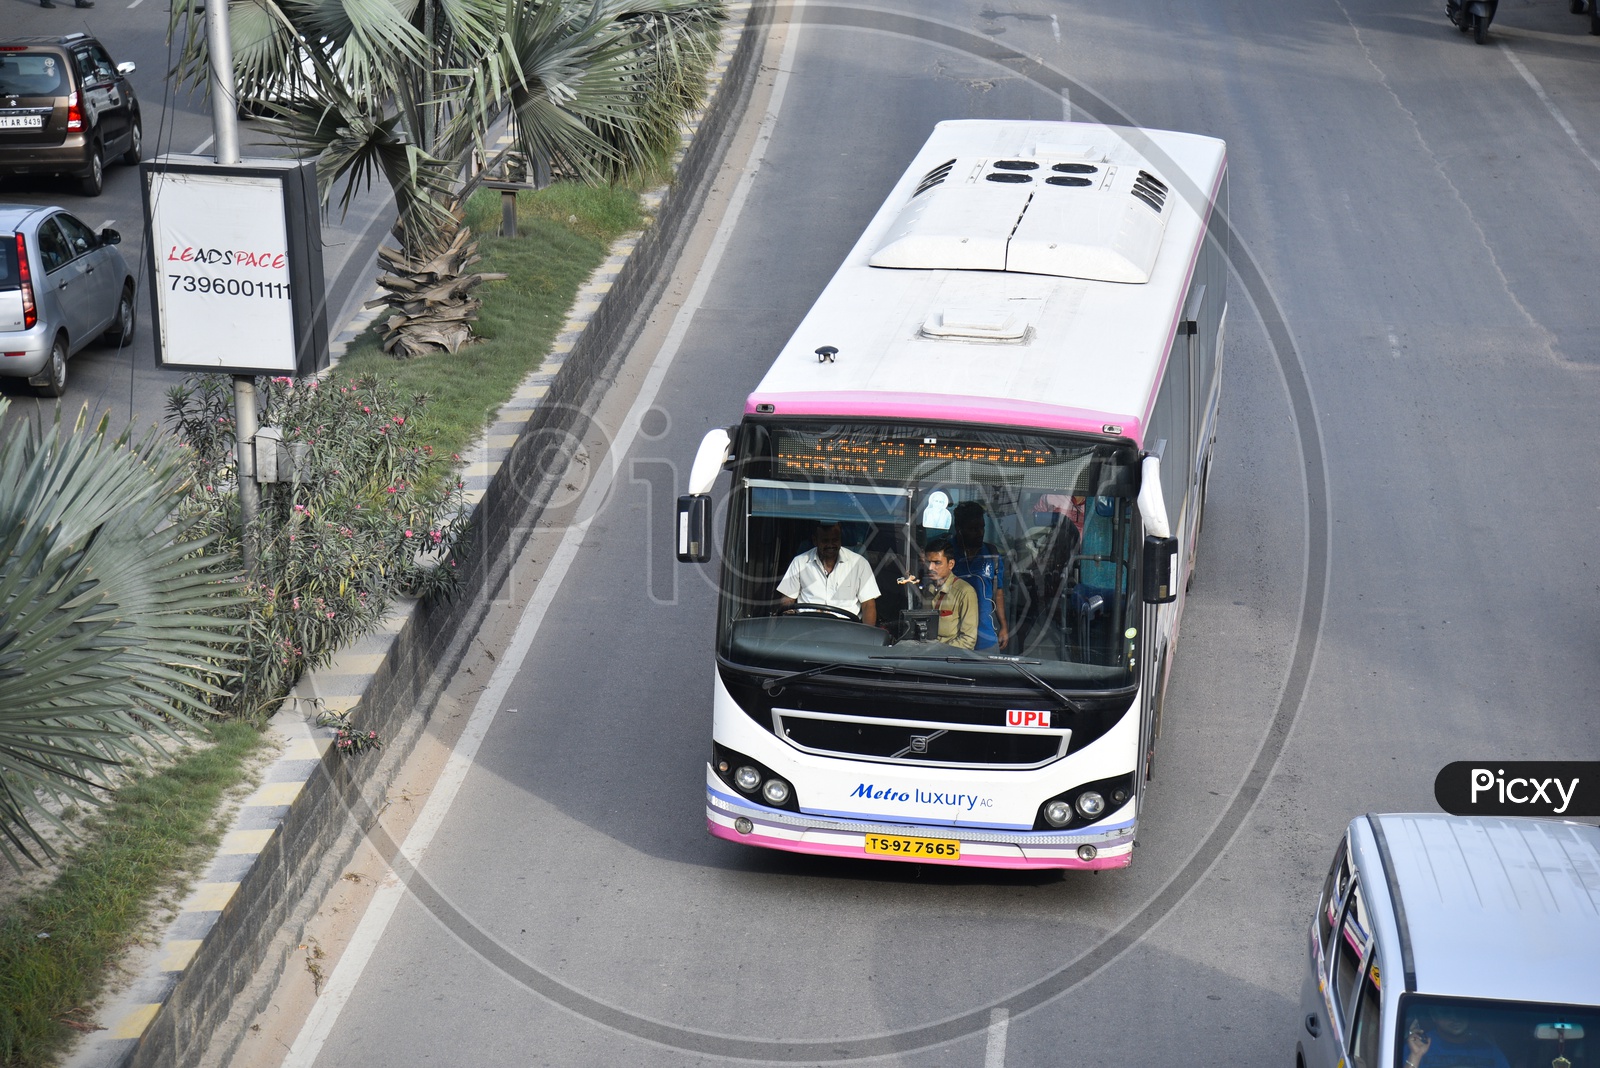 City Bus of JNNURUM  metro Luxury AC Bus On Hyderabad City Roads